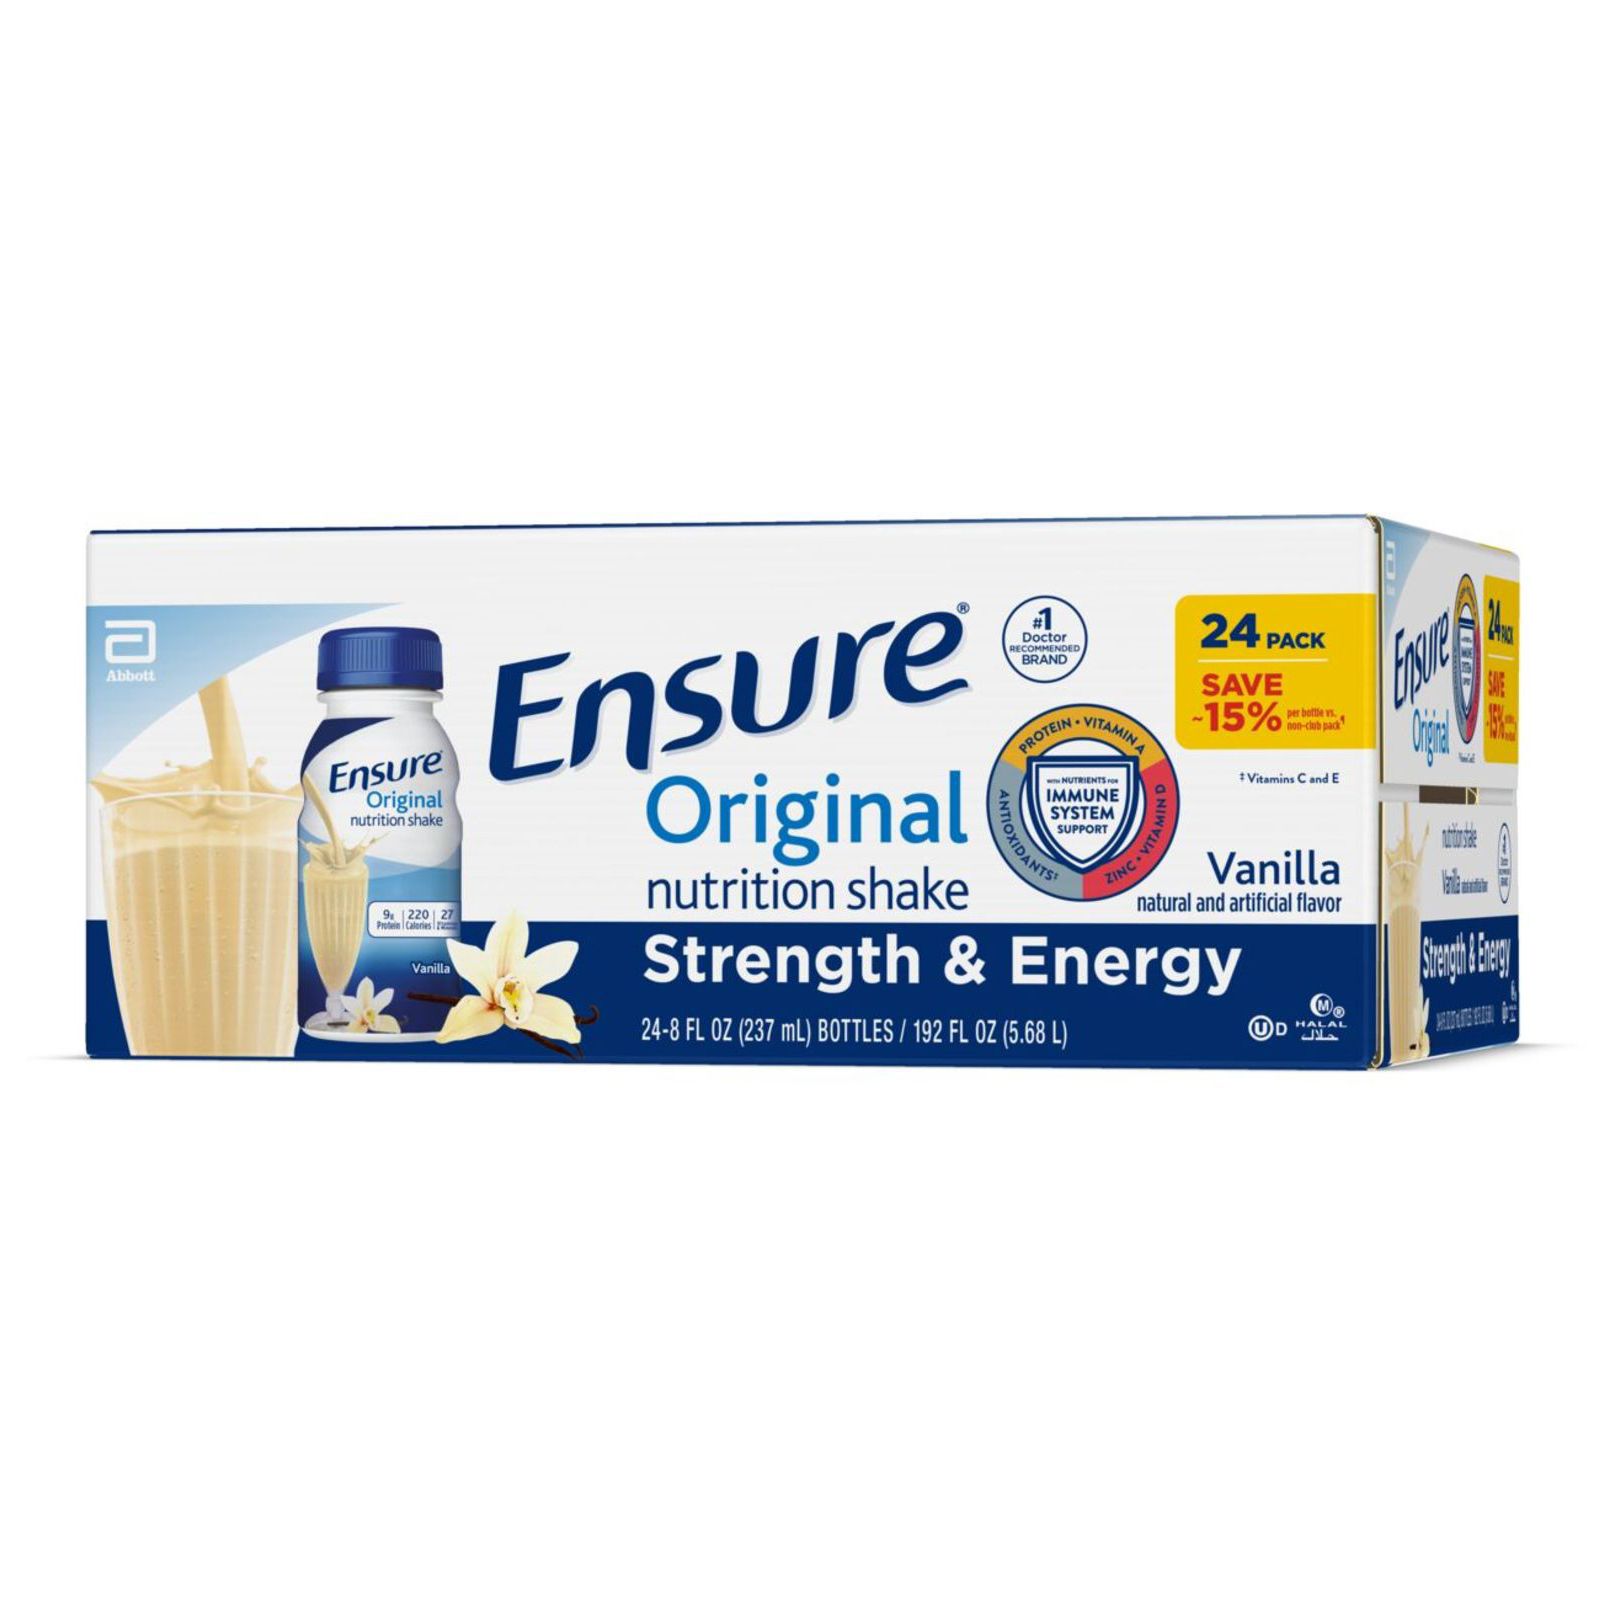 Ensure Original Nutrition Powder Review - Complete Ingredients?